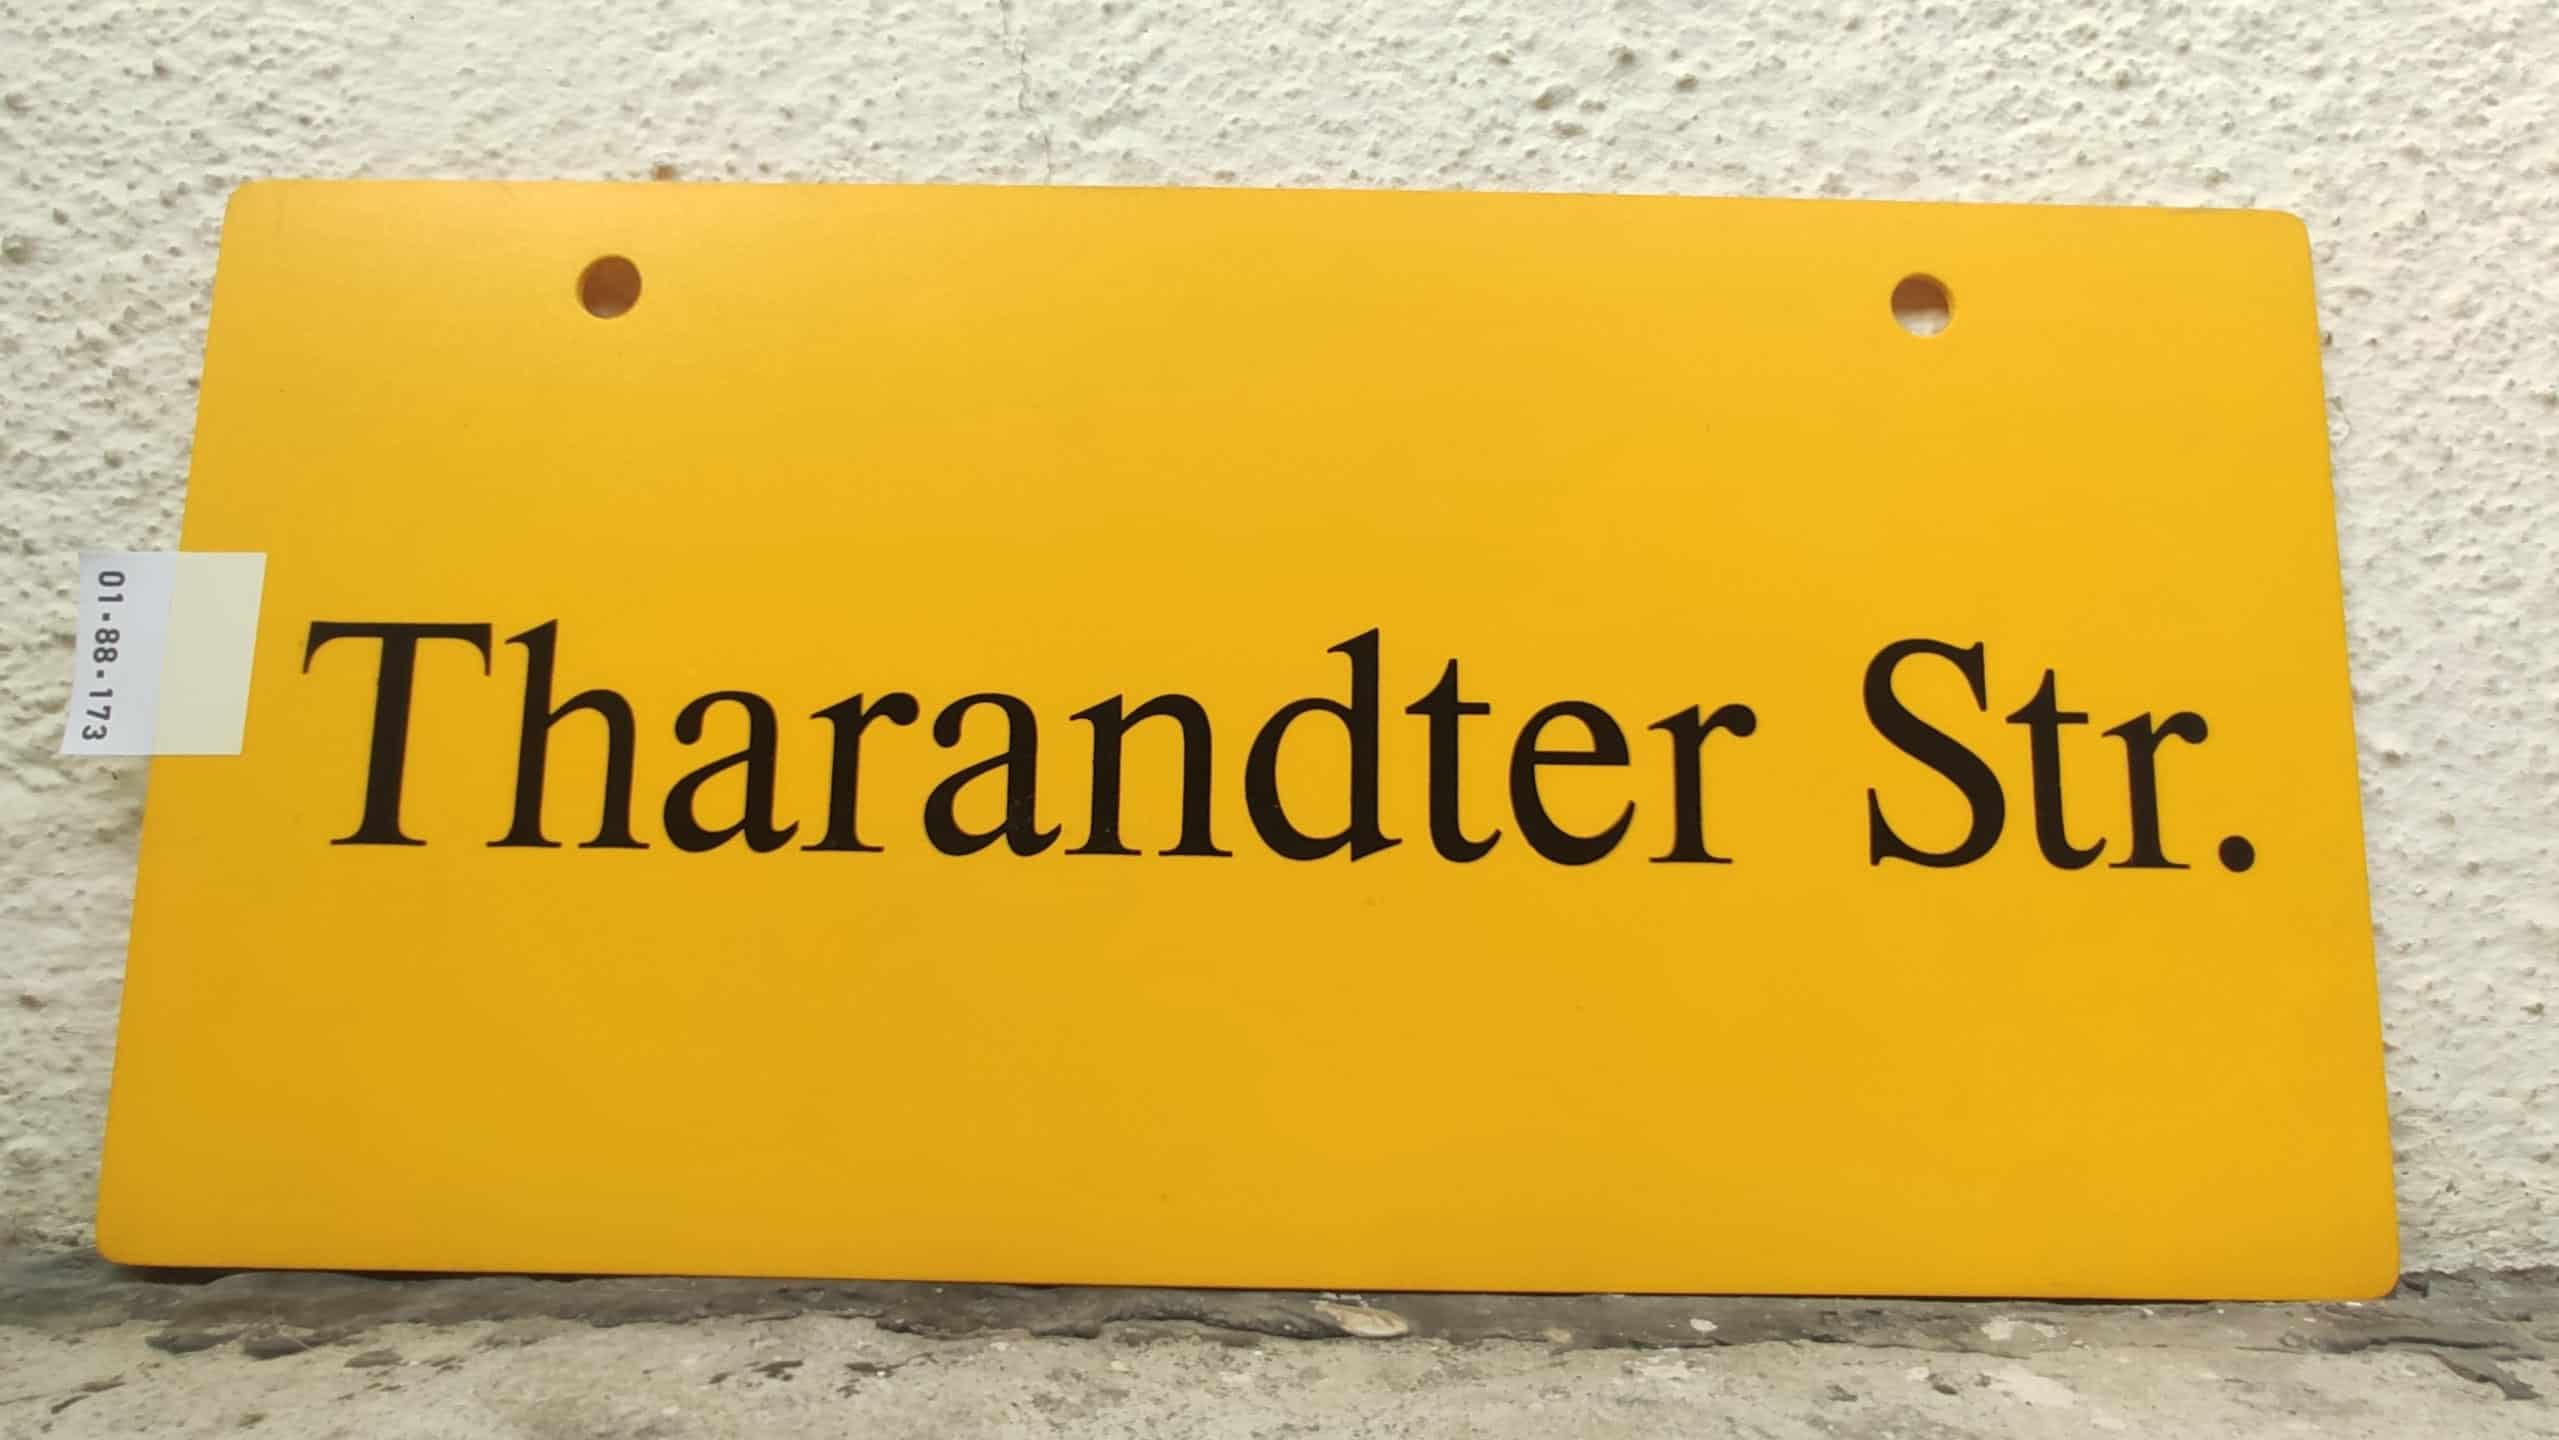 Tharandter Str.